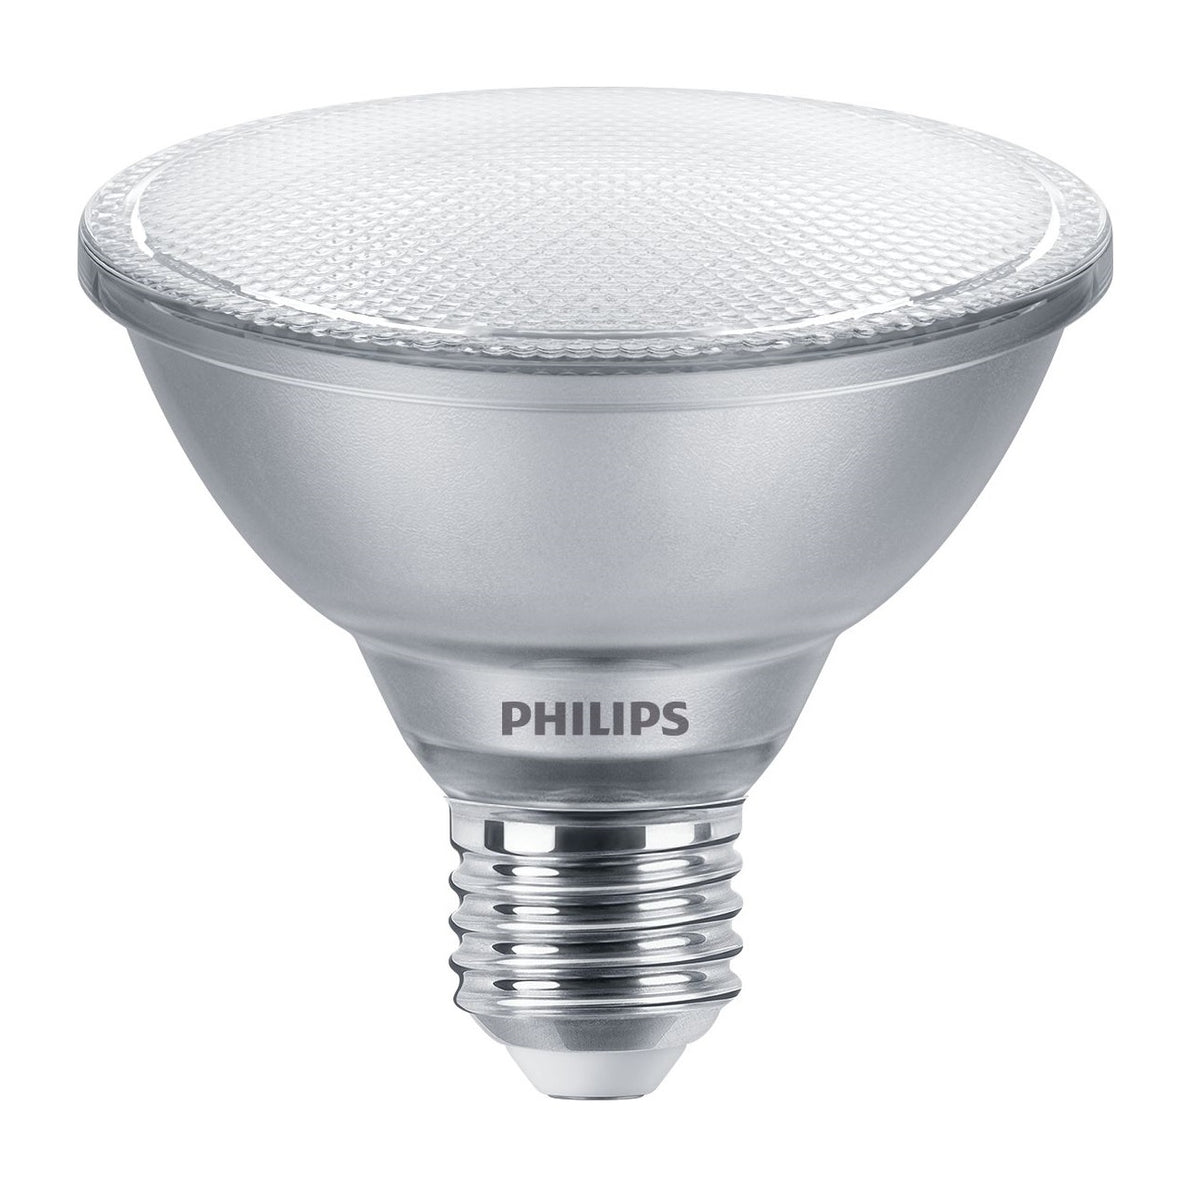 Philips R7s Eco Halogenstab 120W = 150W 78mm Halogen Stab Leuchtmitte